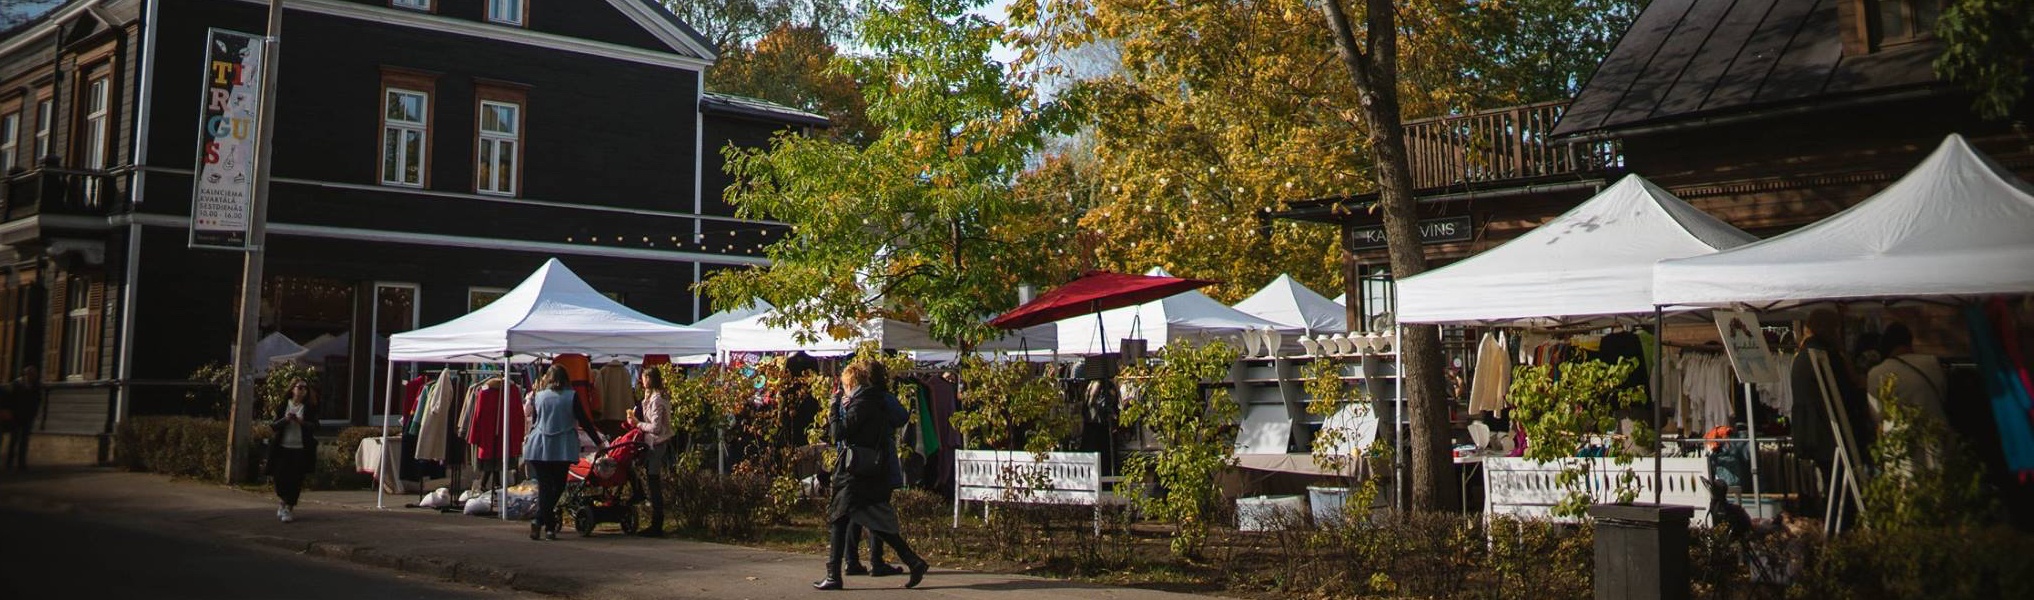 Social and creative entrepreneurs from Latvia and Estonia meet at a sunny outdoor market in Riga